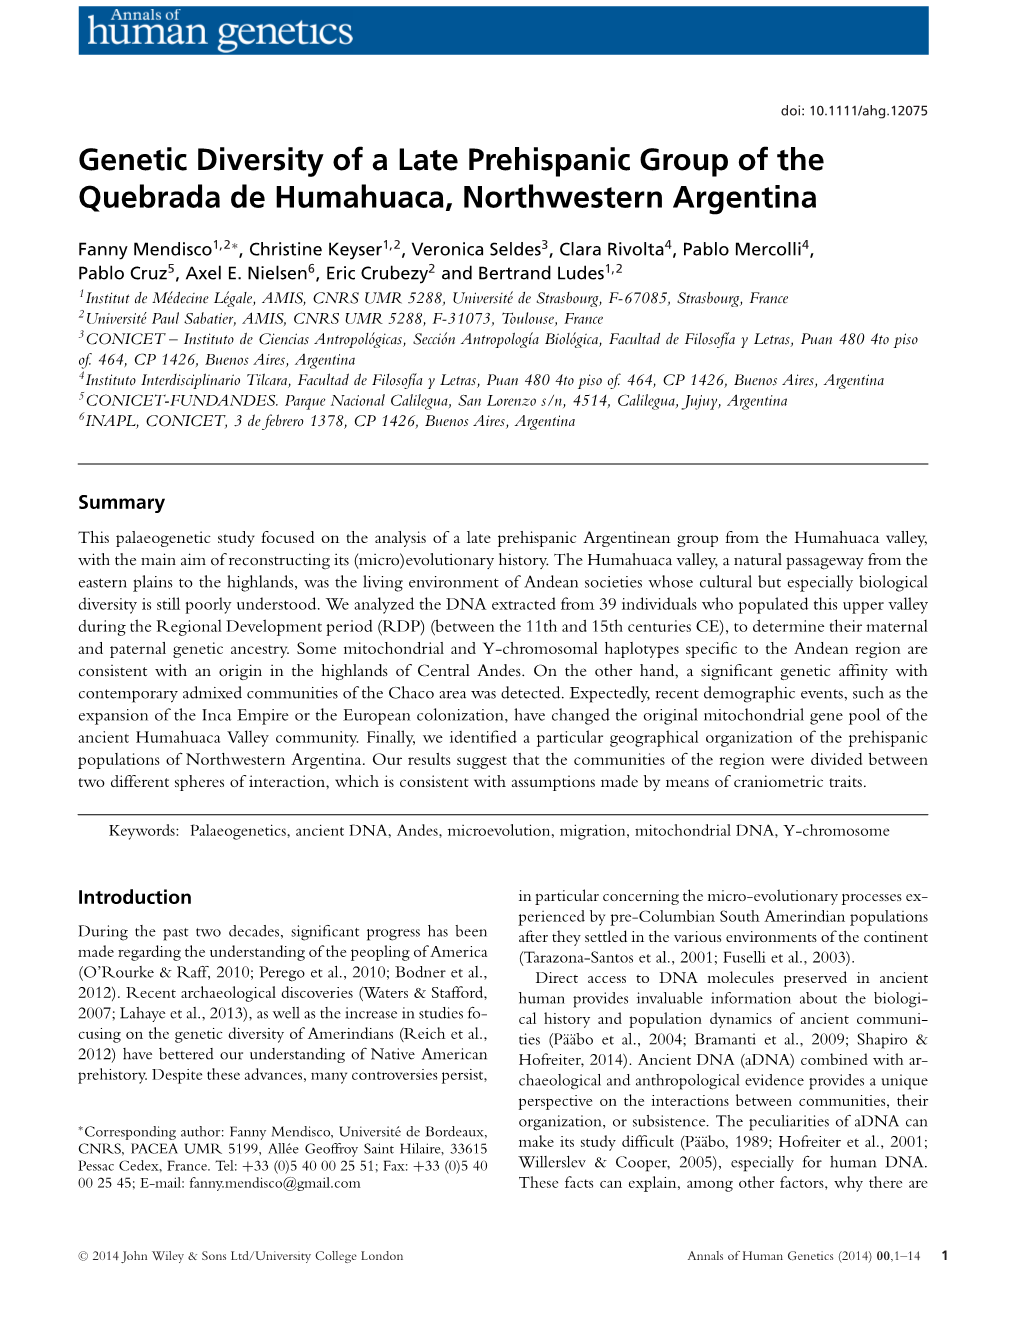 Genetic Diversity of a Late Prehispanic Group of the Quebrada De Humahuaca, Northwestern Argentina